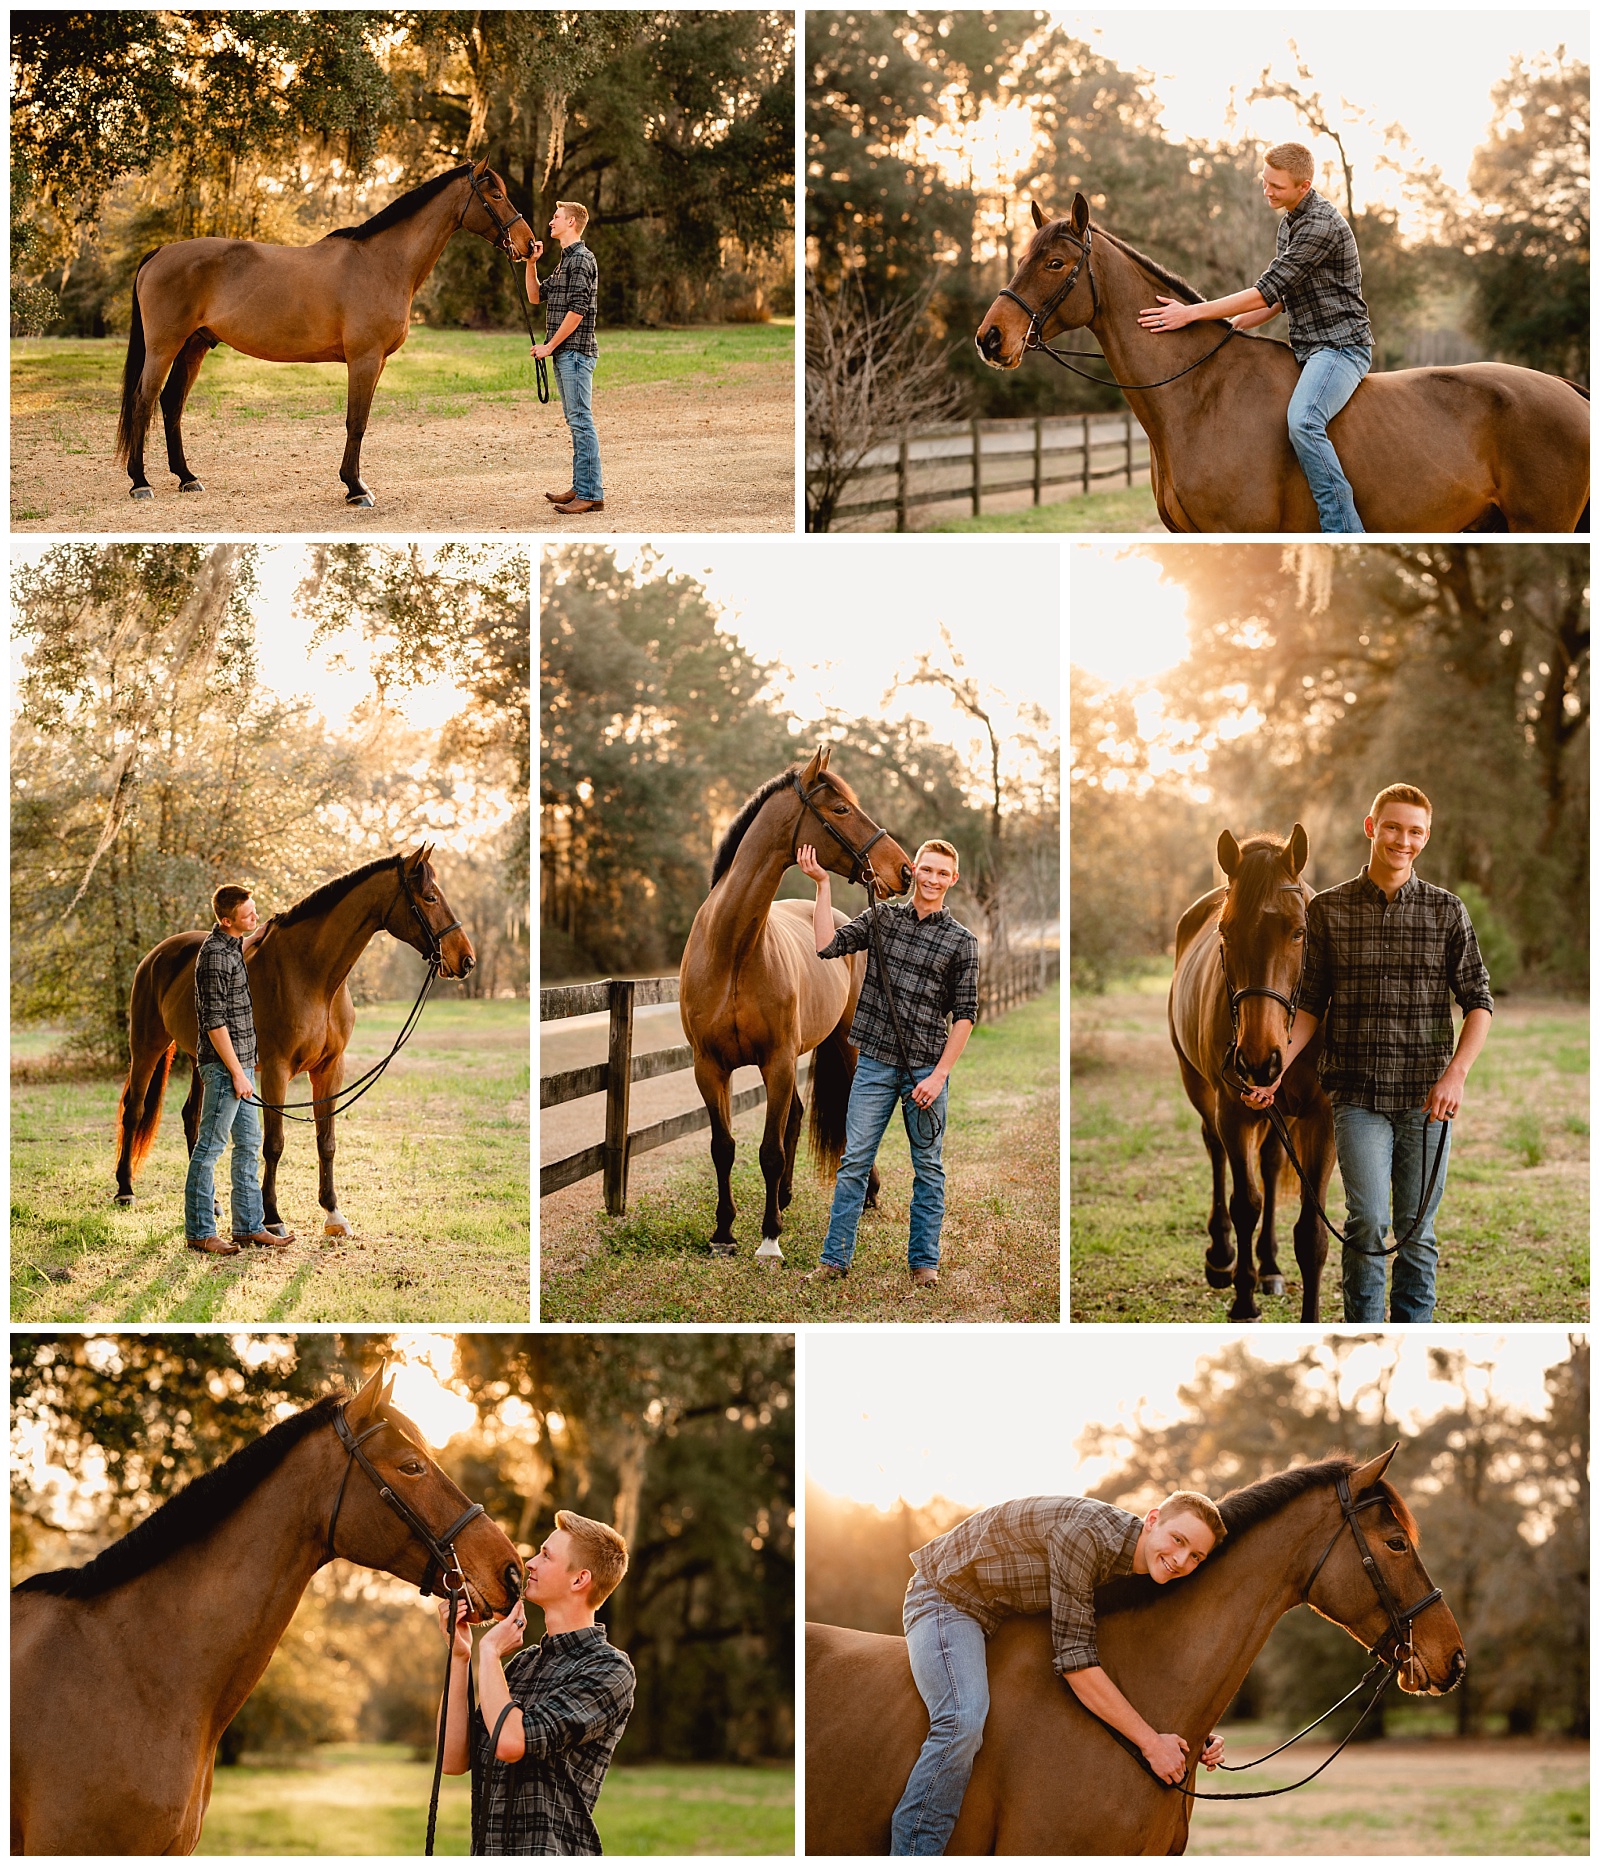 Equestrian photographer near Tallahassee, Florida. Golden hour at Cavallo Farms.